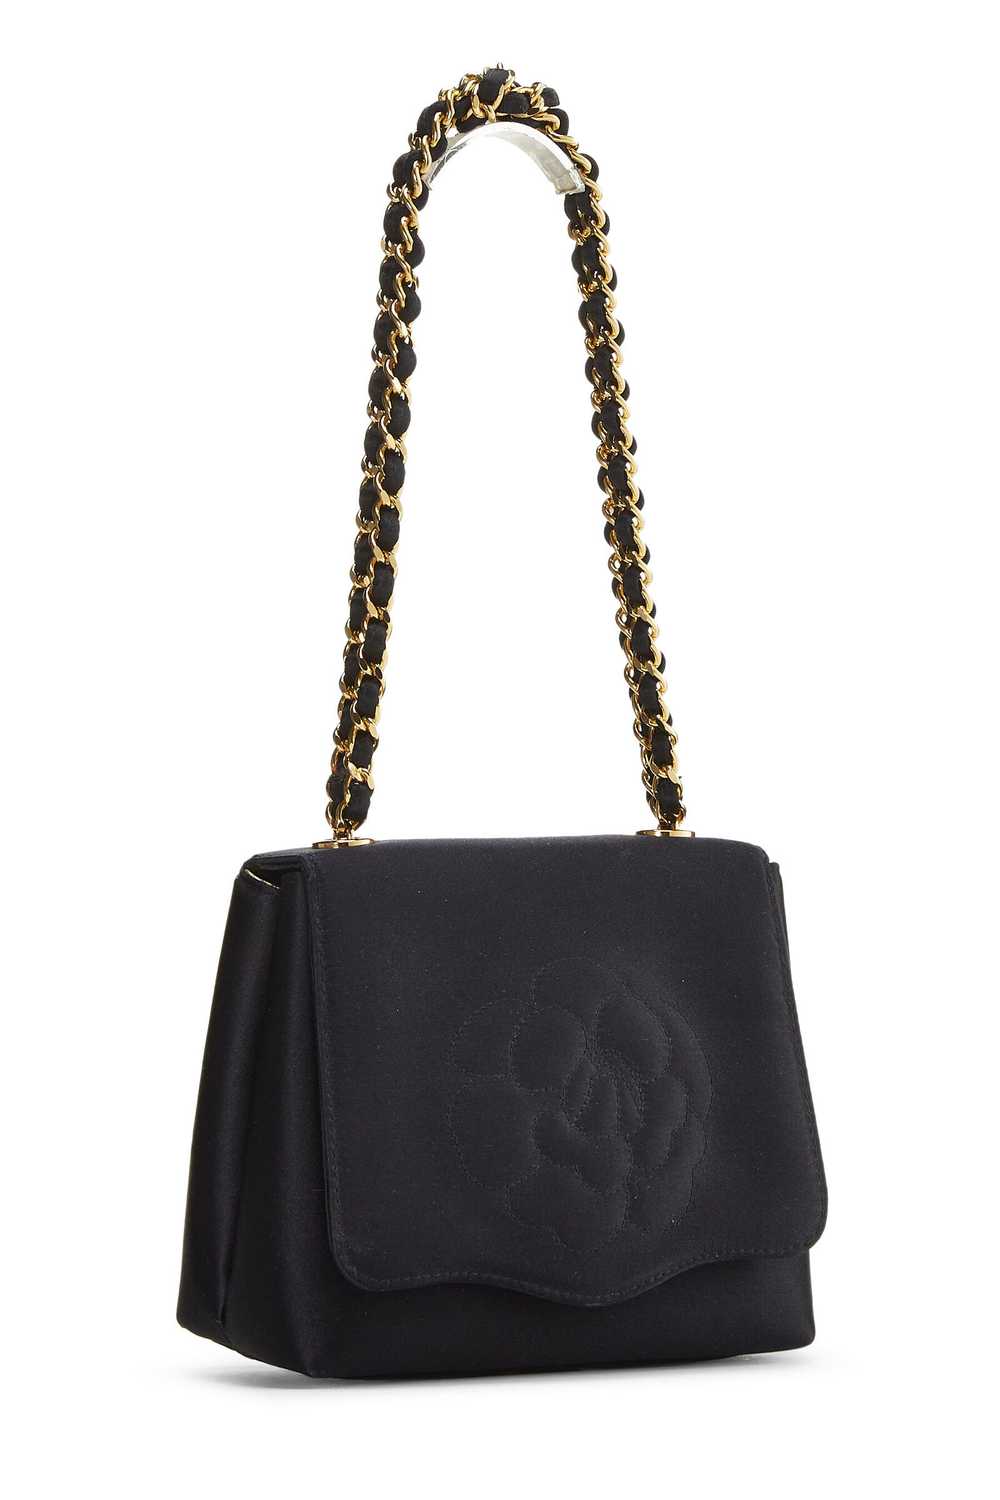 Black Satin Camellia Handbag Mini - image 2